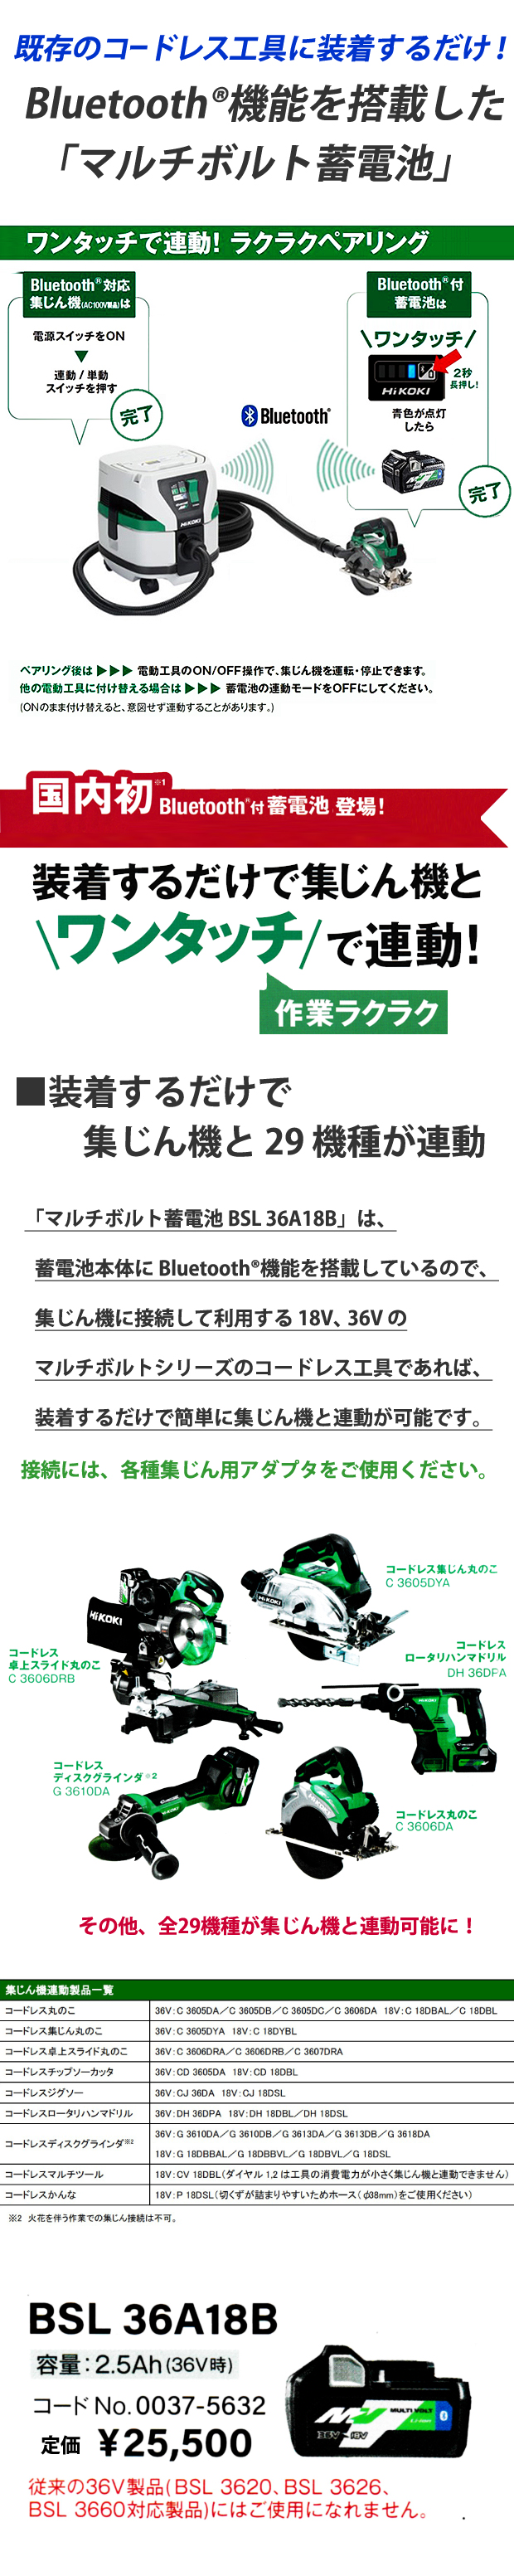 HiKOKI Bluetooth搭載マルチボルト蓄電池 BSL36A18B